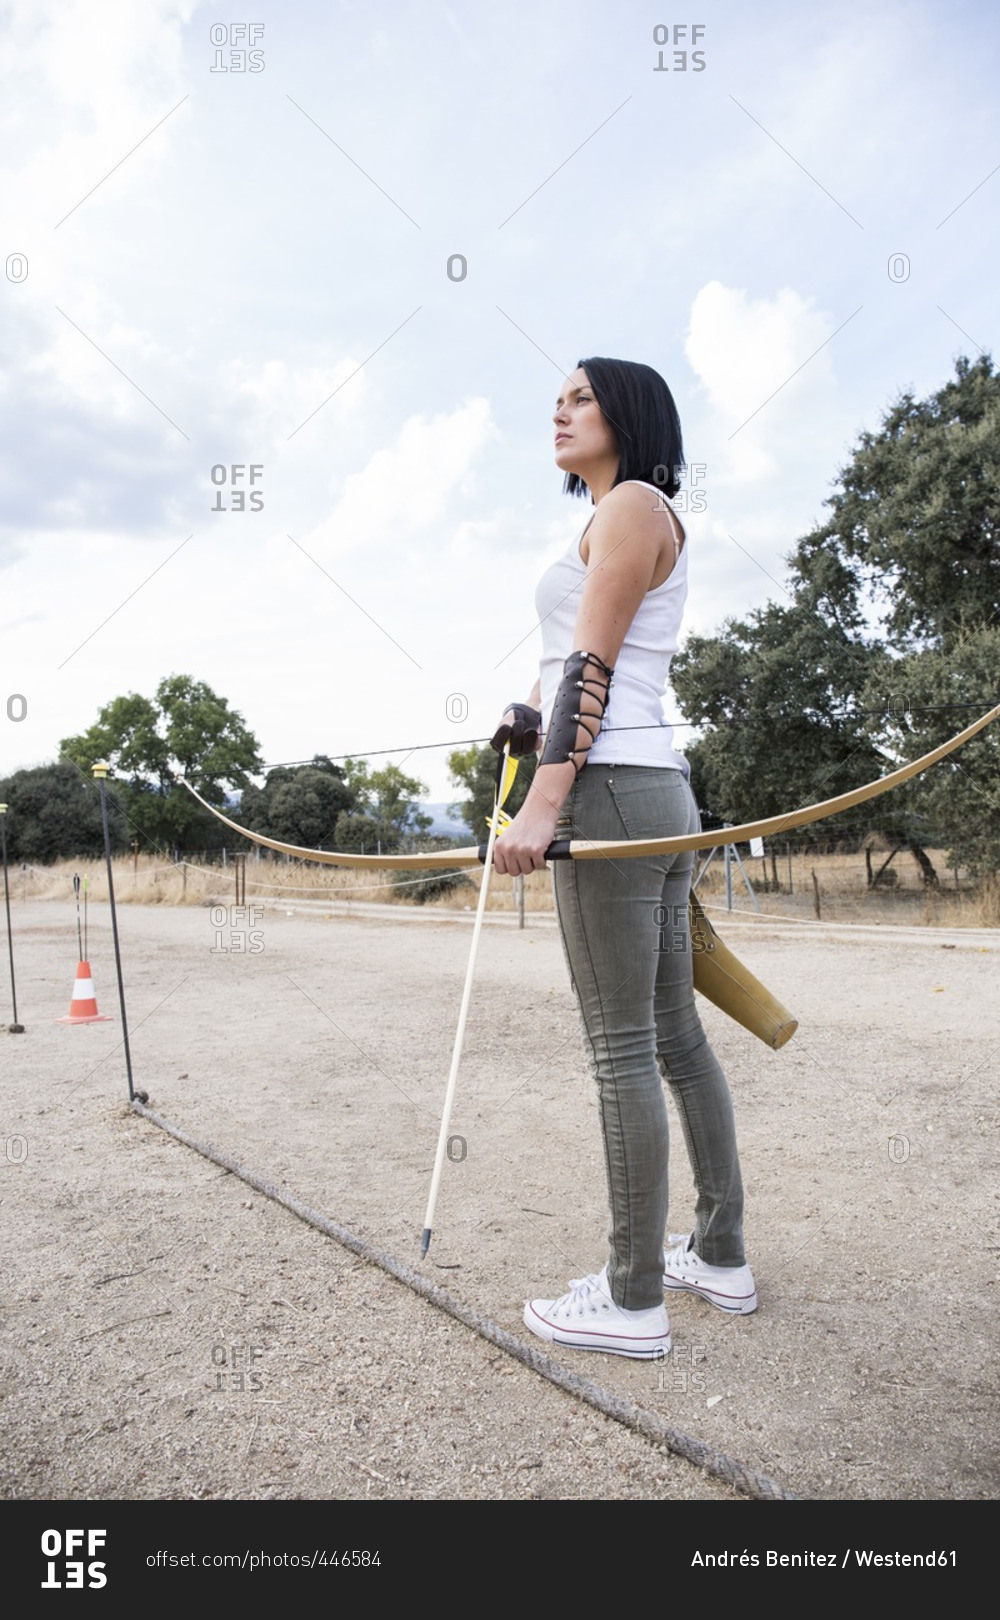 Archeress on sports field